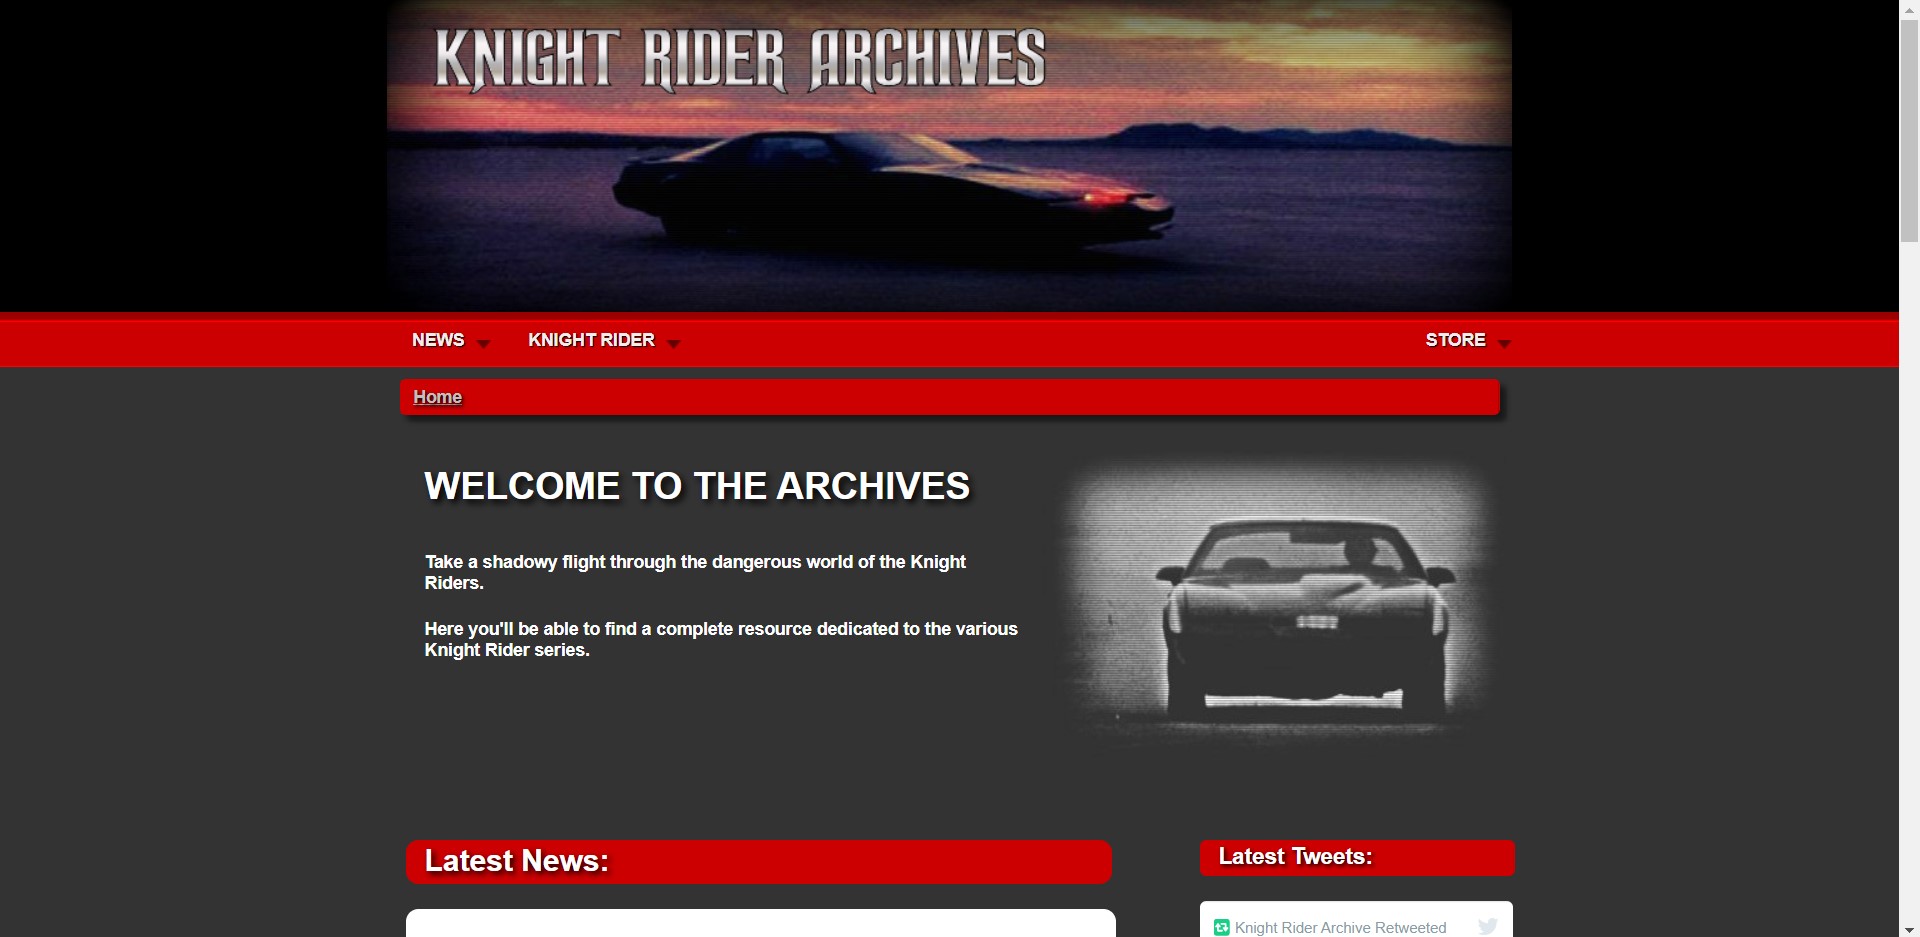 Knight Rider Archives - Strnka o originlnom serili